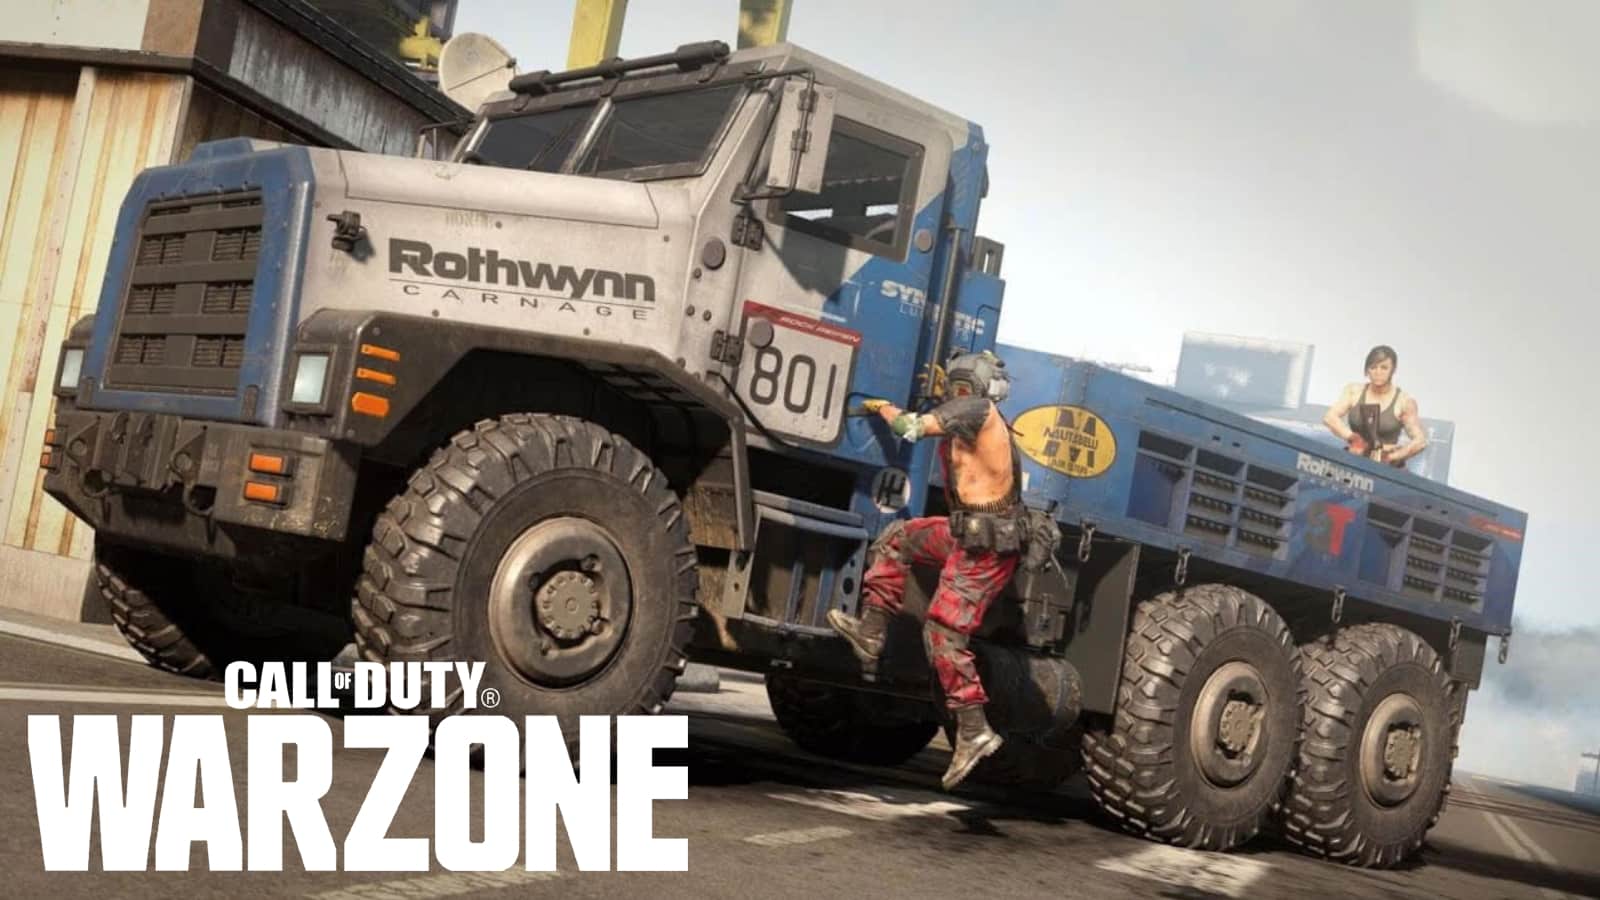 Bizarre Warzone sentry gun glitch is making trucks unusable